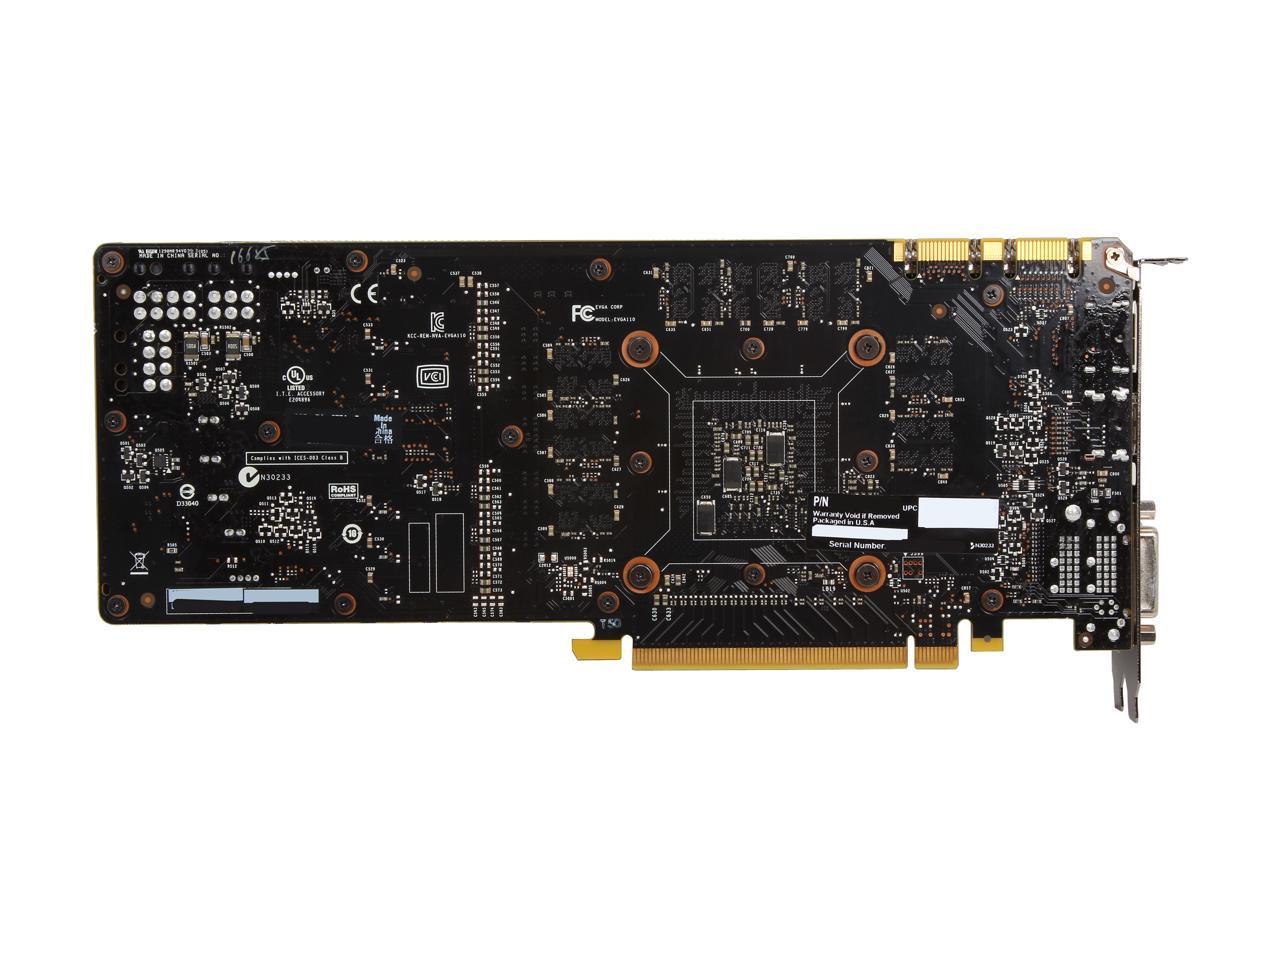 EVGA SuperClocked w/ ACX Cooling 02G-P4-2774-KR G-SYNC Support GeForce GTX 770 2GB 256-bit GDDR5 PCI Express 3.0 SLI Support Video Card